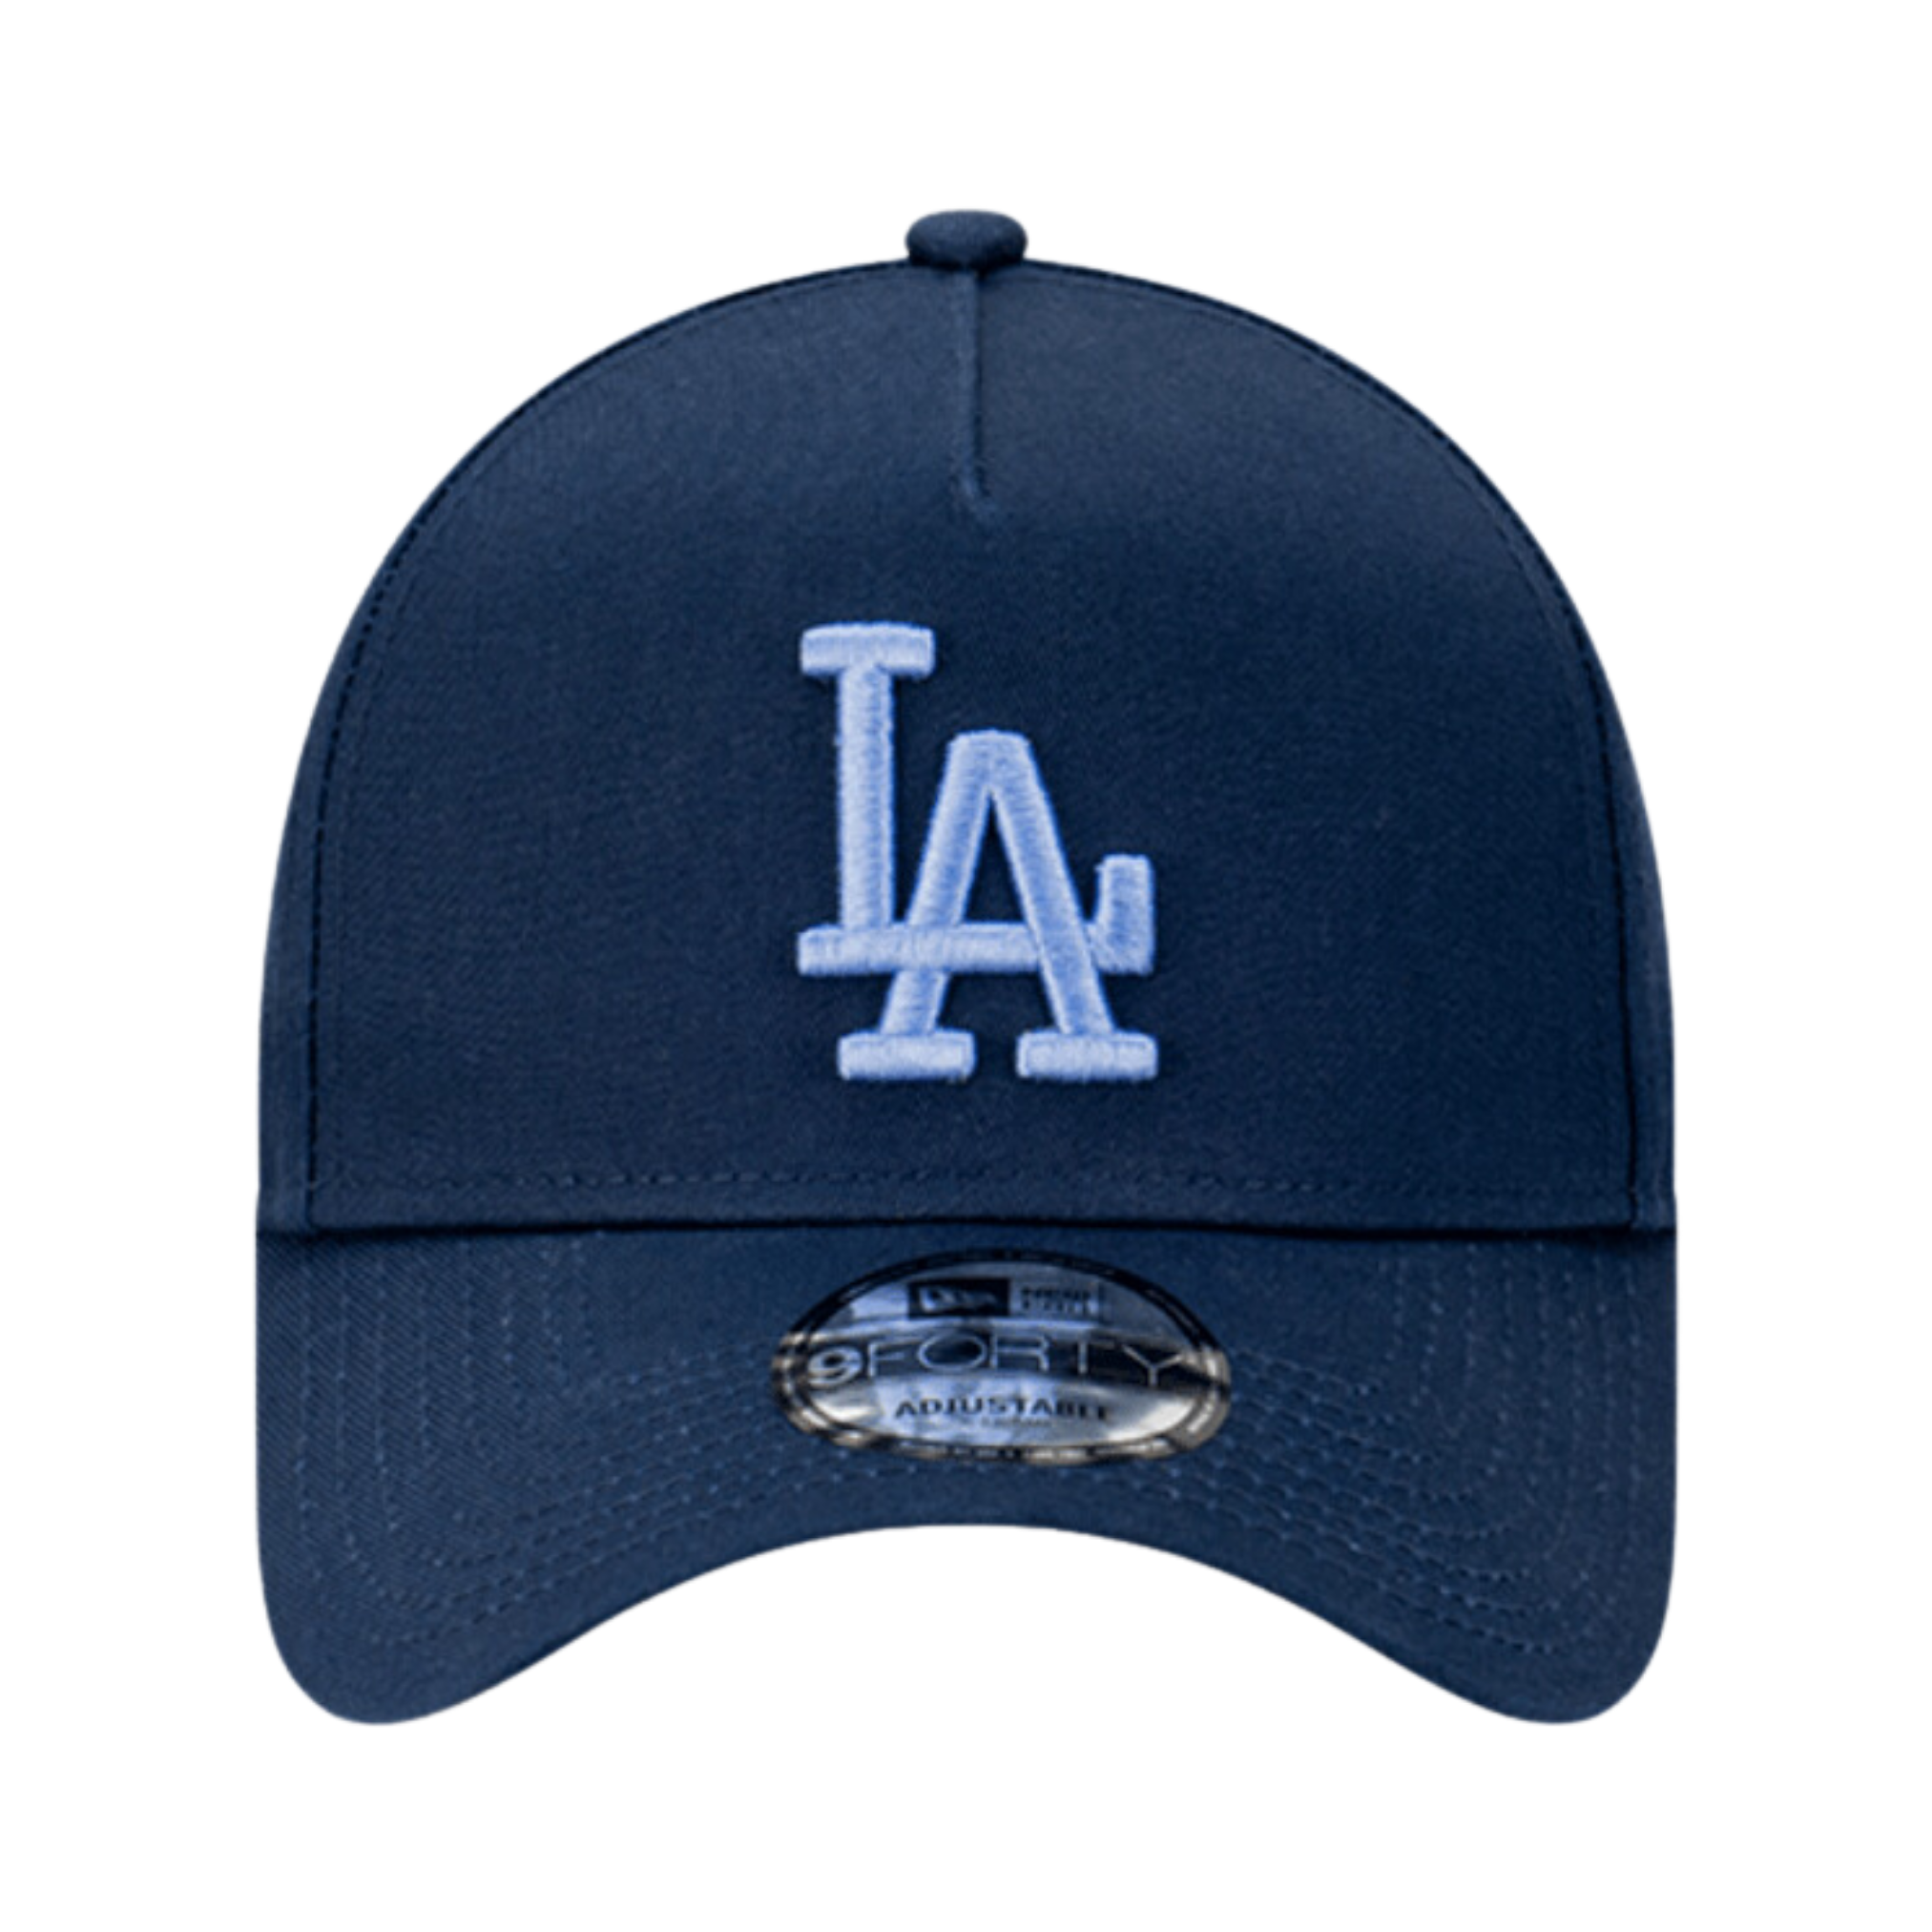 Gorra Los Angeles Dodgers 610